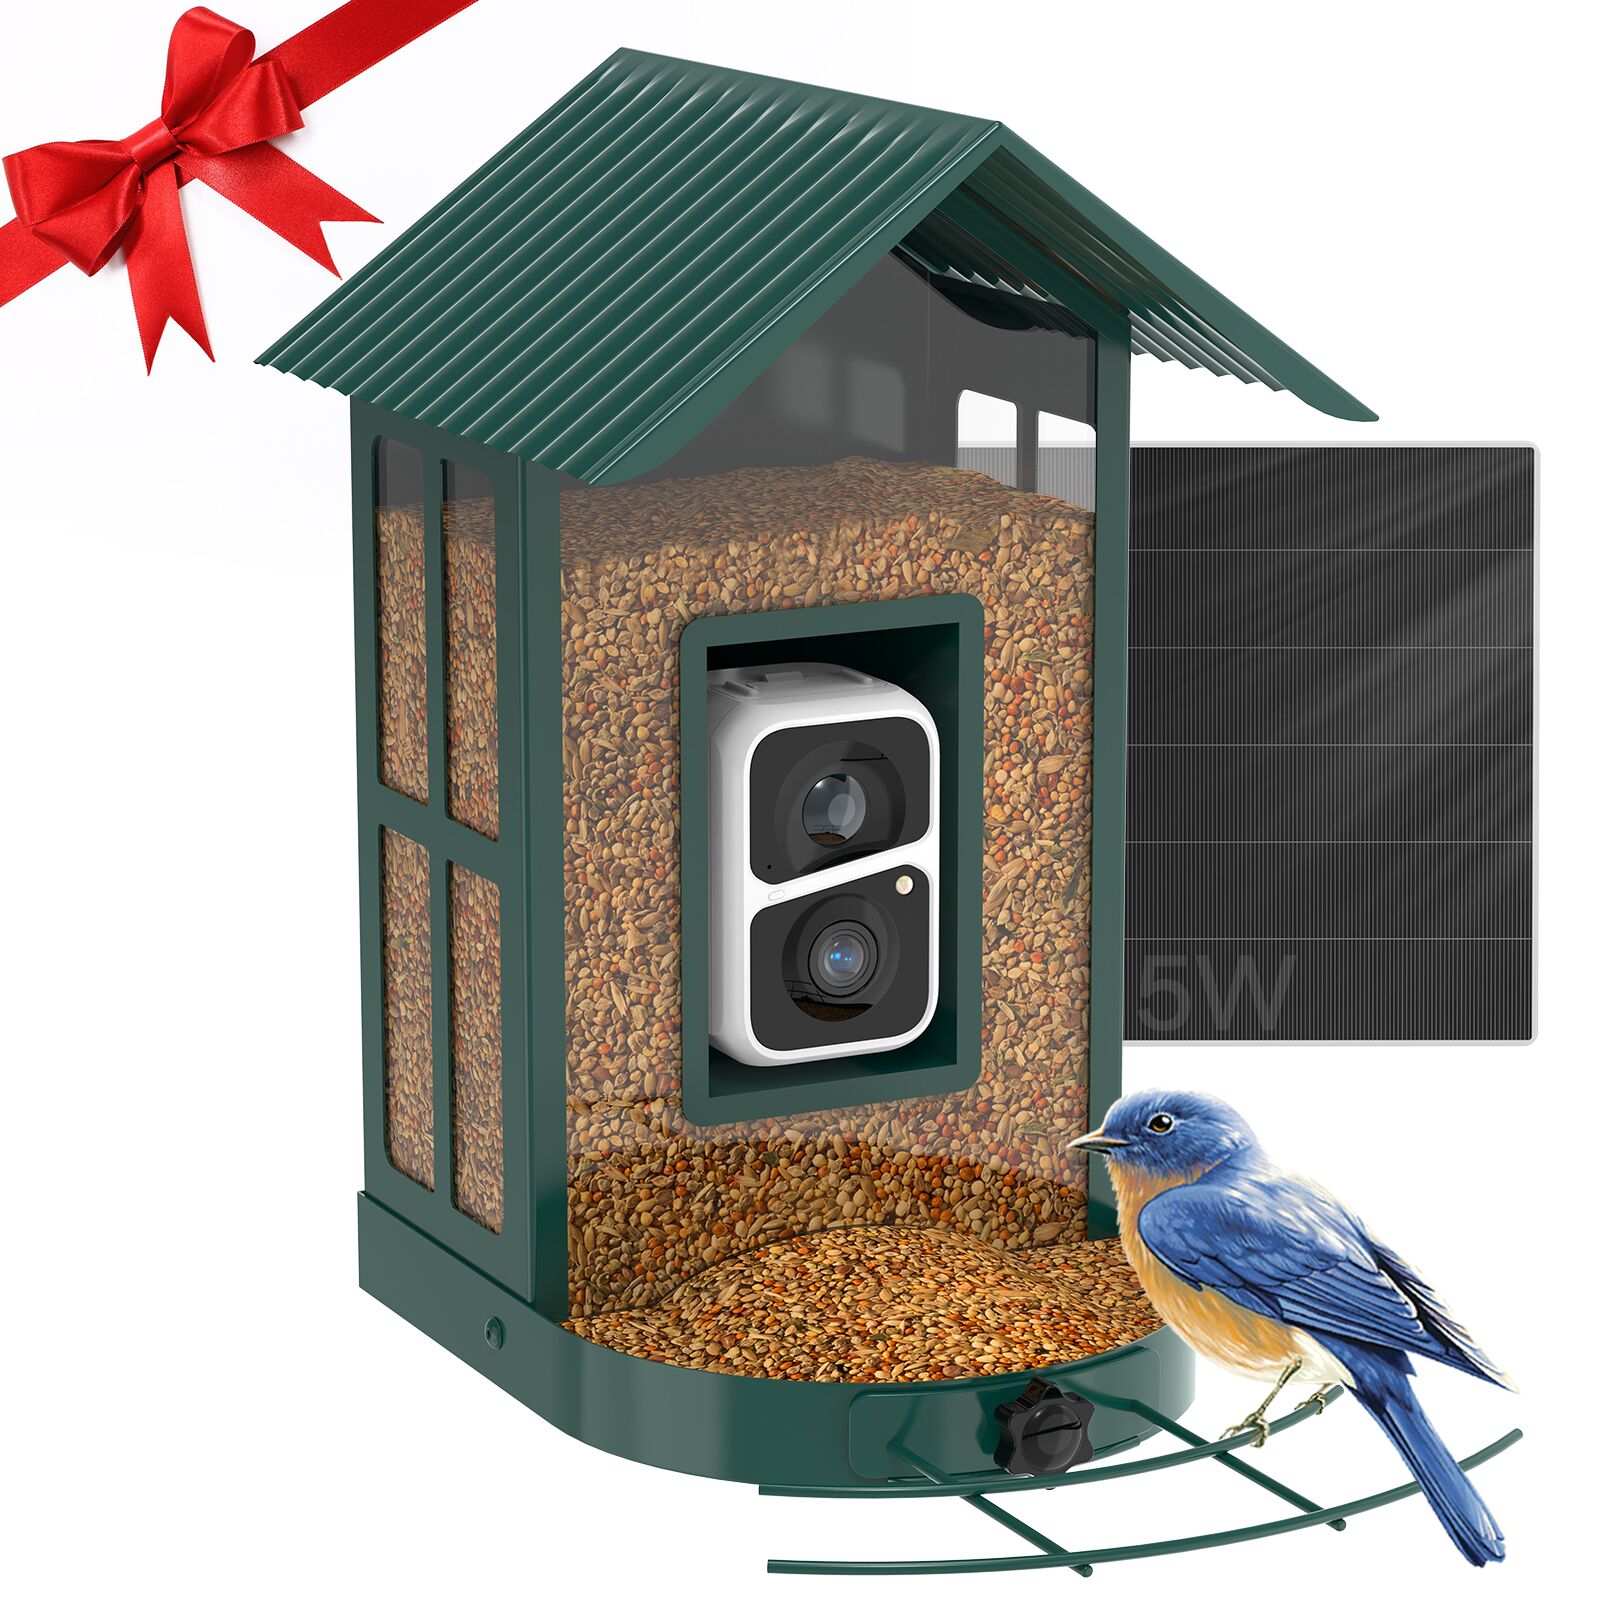 SOLIOM® BF08 2.7L Solar Smart Bird Feeder AI Camera, Wireless Wifi HD Video Live Cam with app, Metal Bird House, Outdoor Backyard Bird Watching Cam